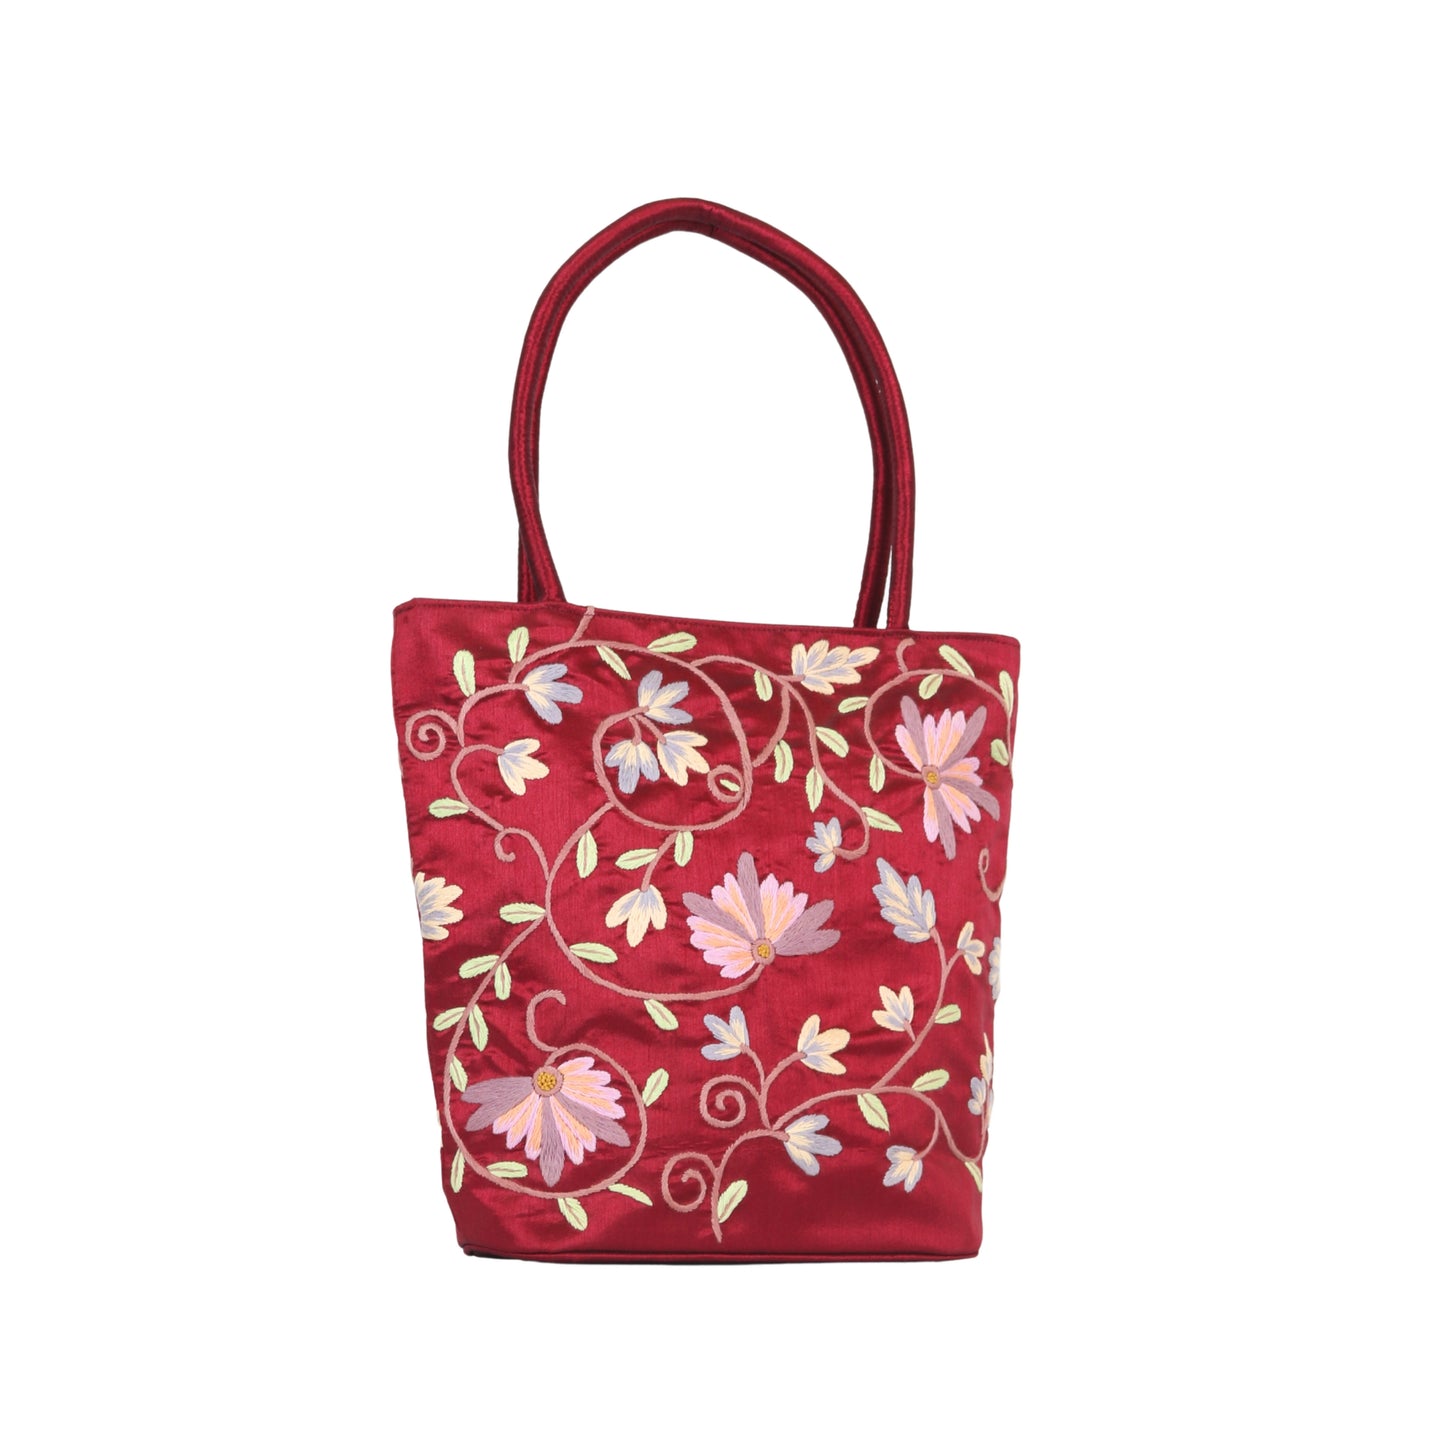 Embroidered Floral Taffeta Medium Tote Bag - Red